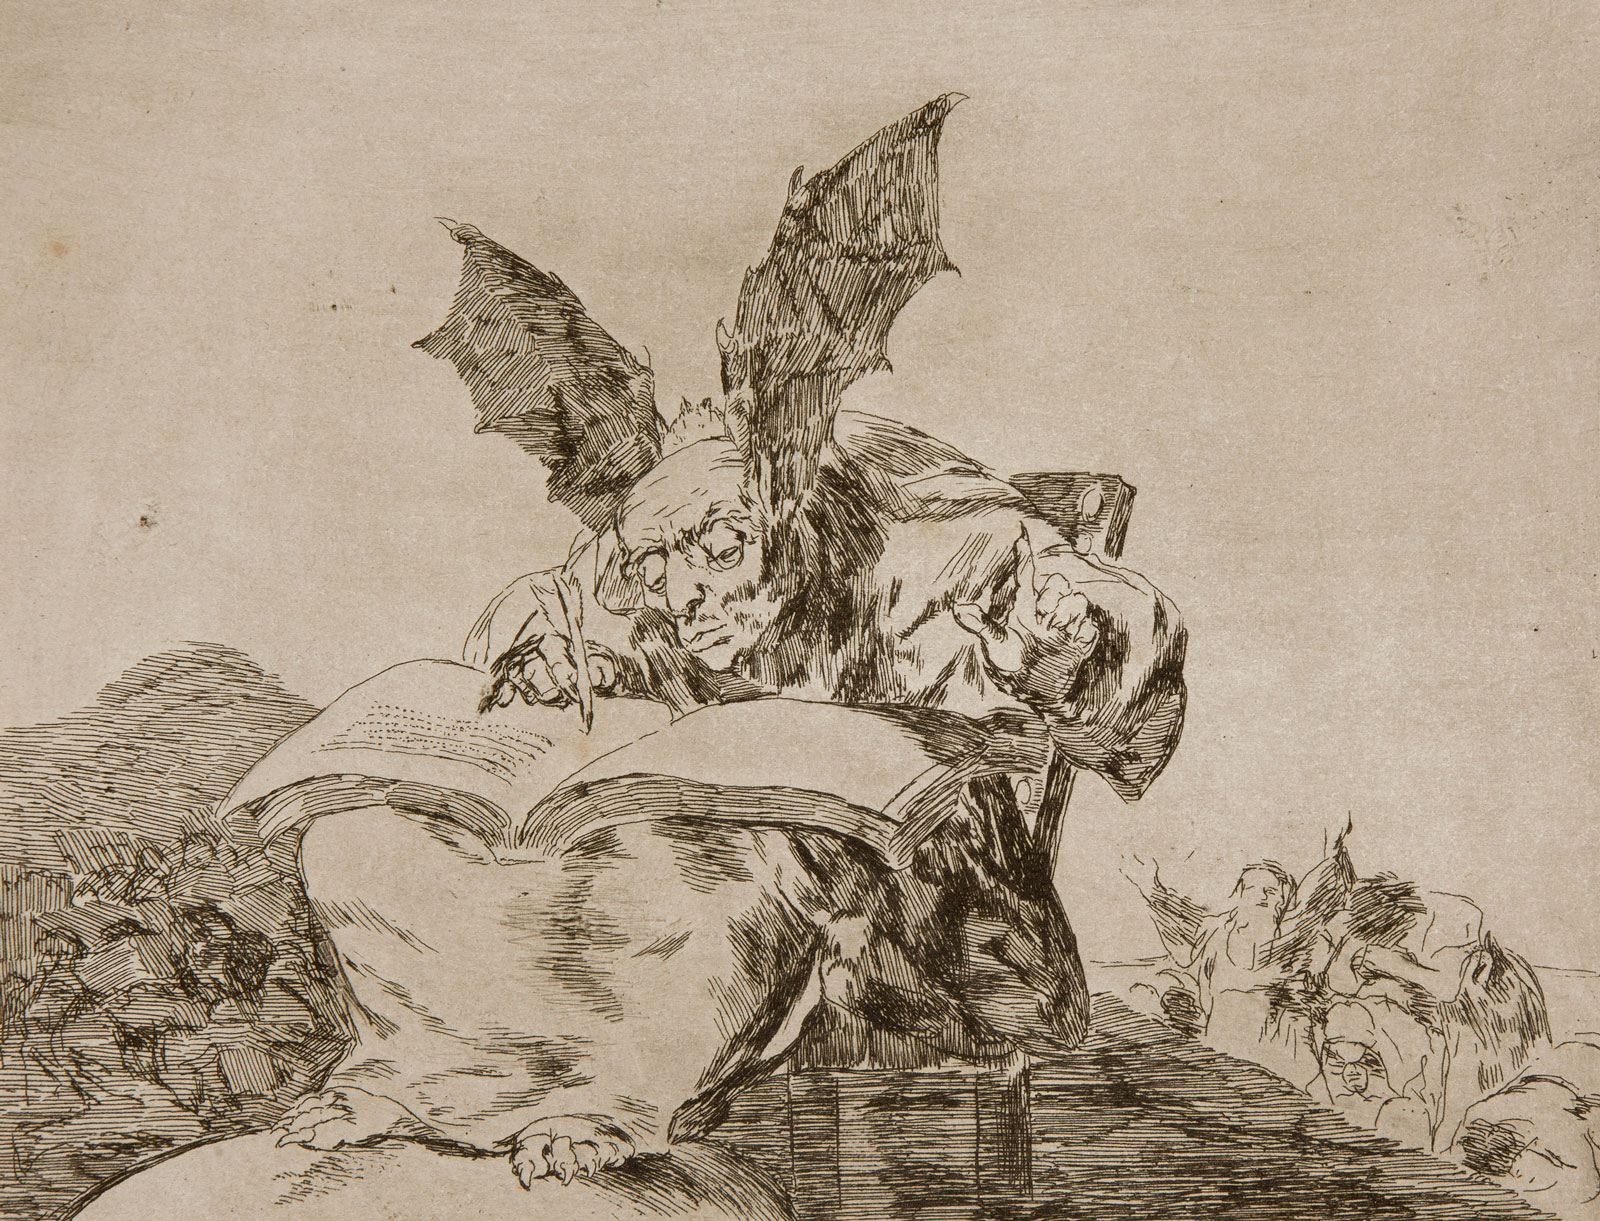 Francisco Goya: Against common good, 1810-1820